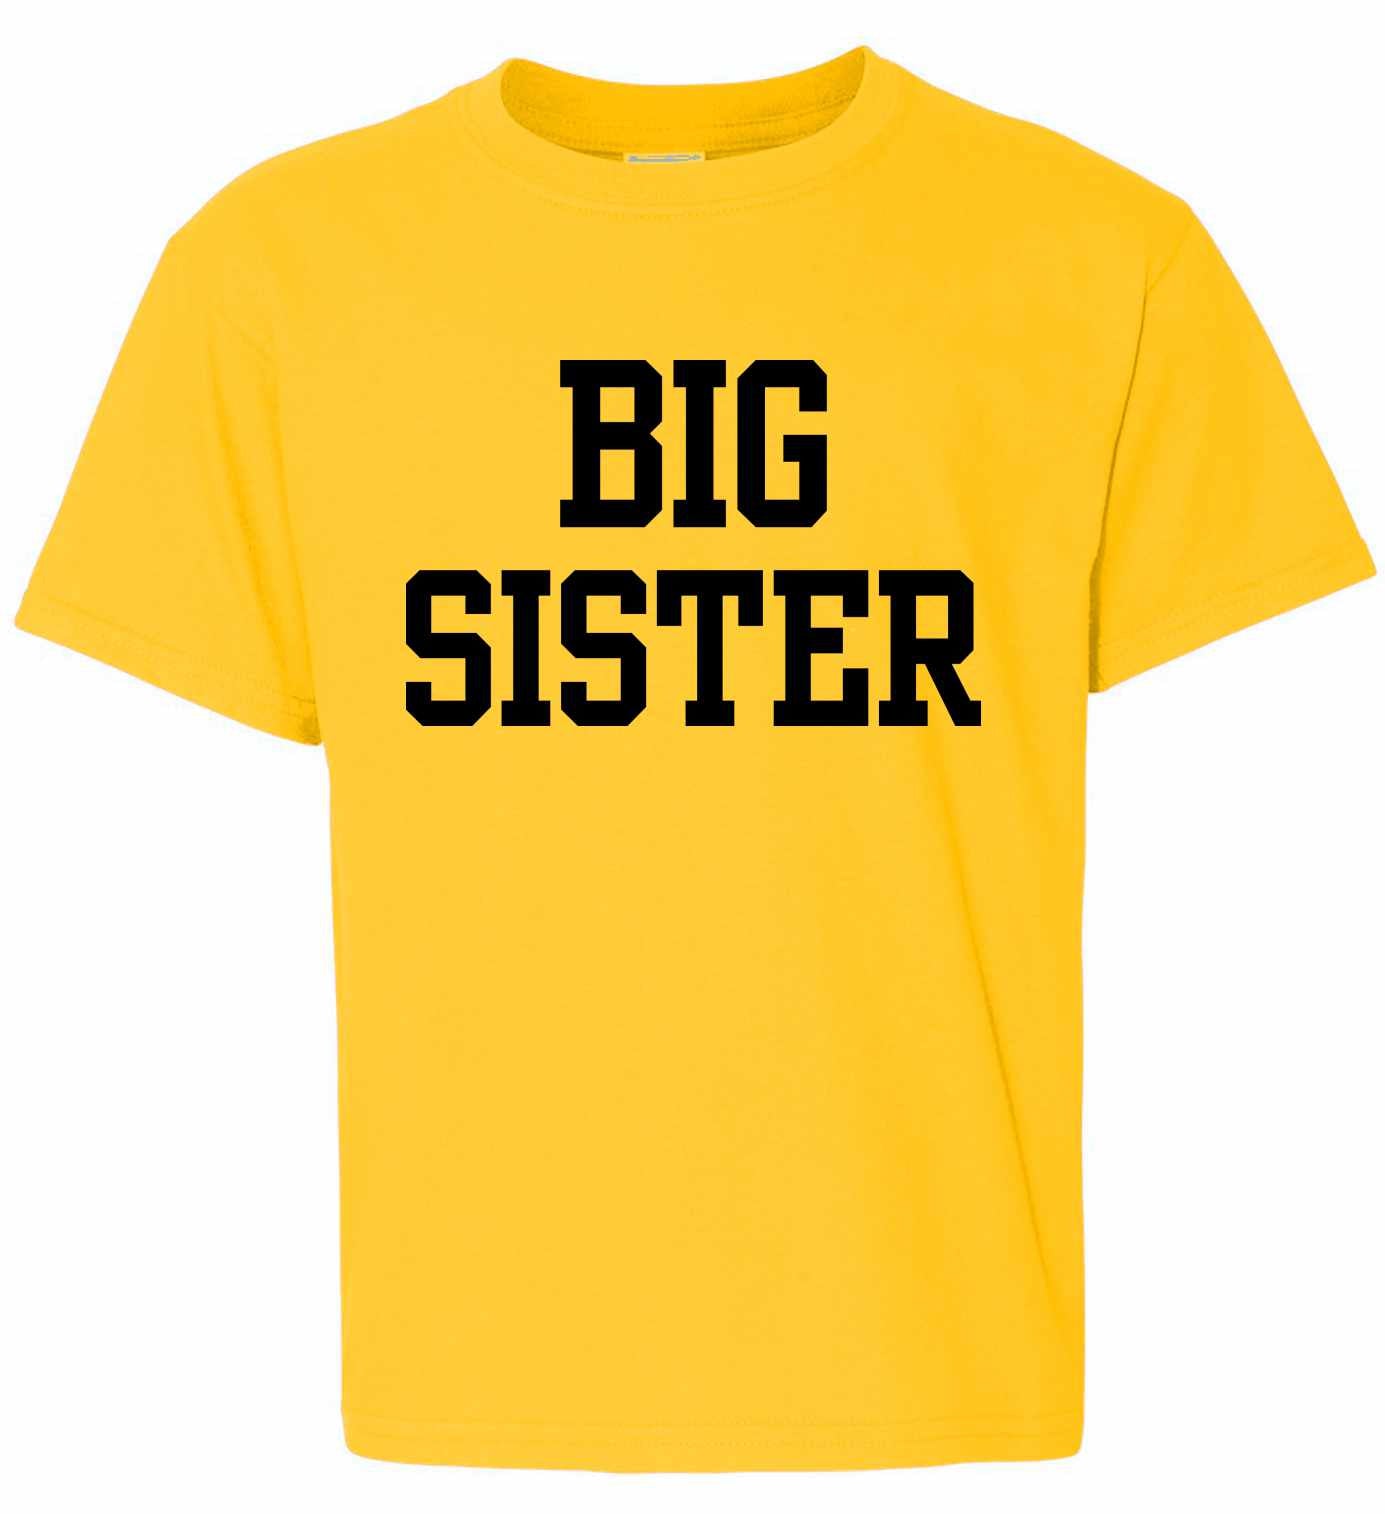 BIG SISTER on Youth T-Shirt (#1143-201)